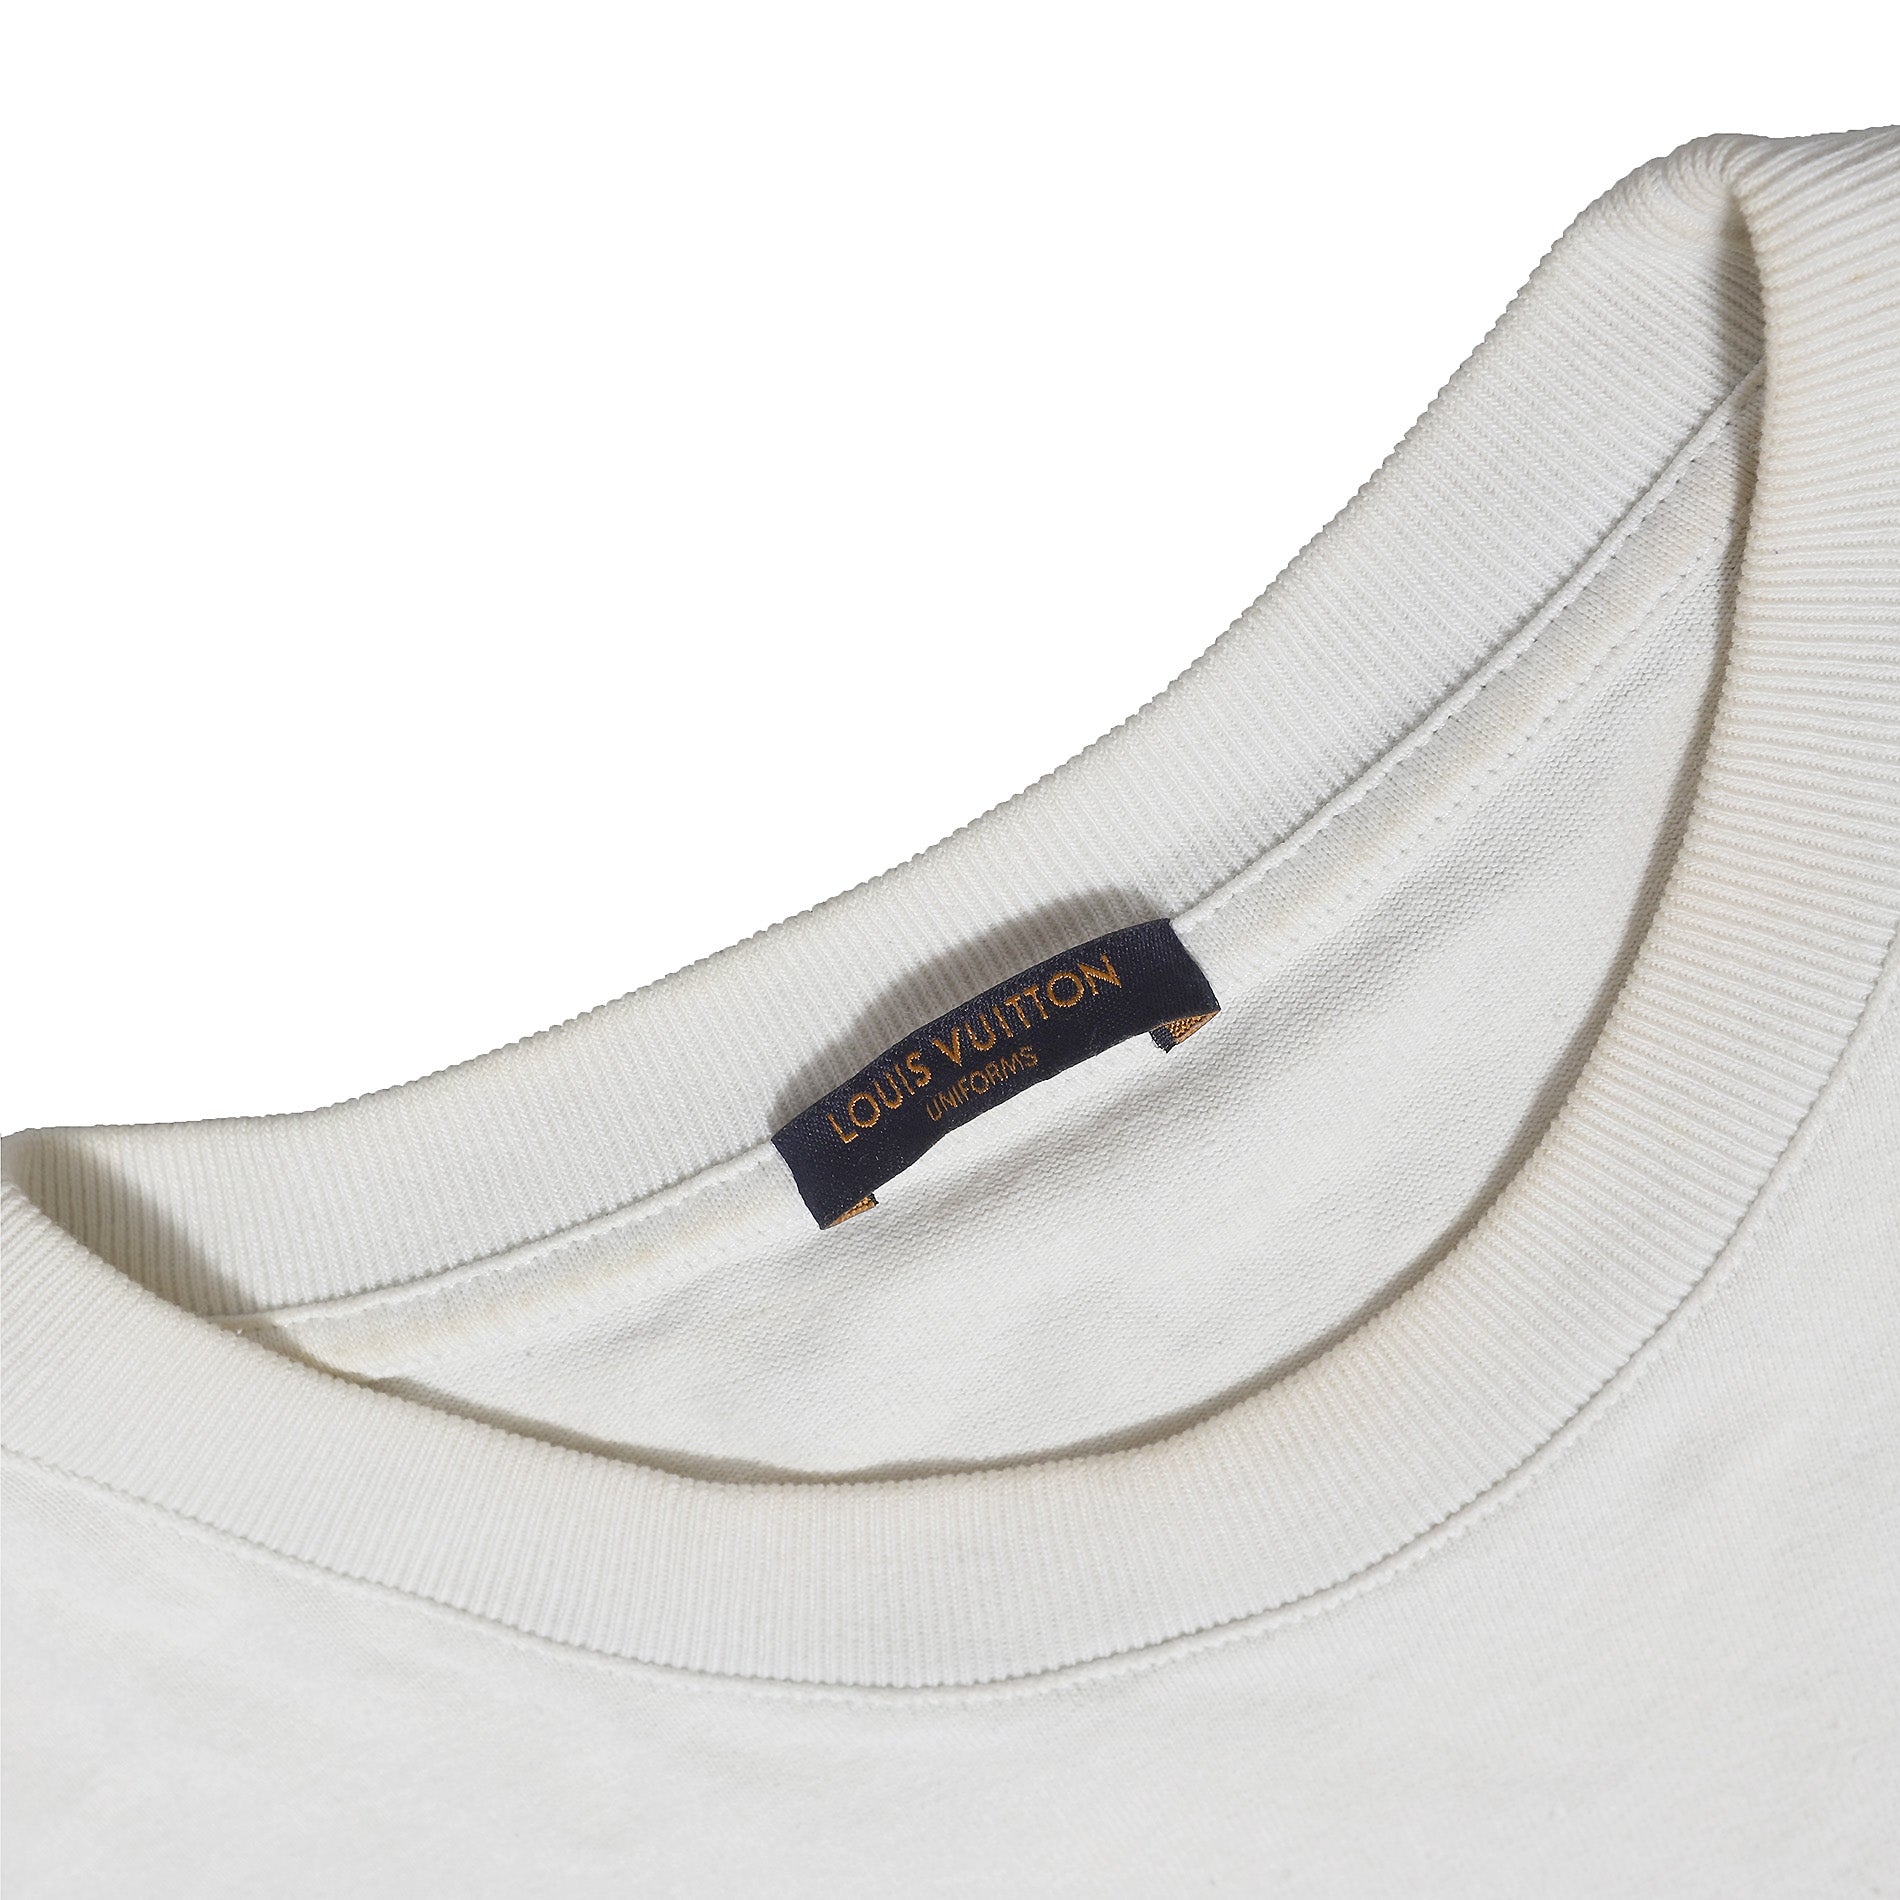 Louis Vuitton SS19 Show Invitation T-Shirt - Ākaibu Store